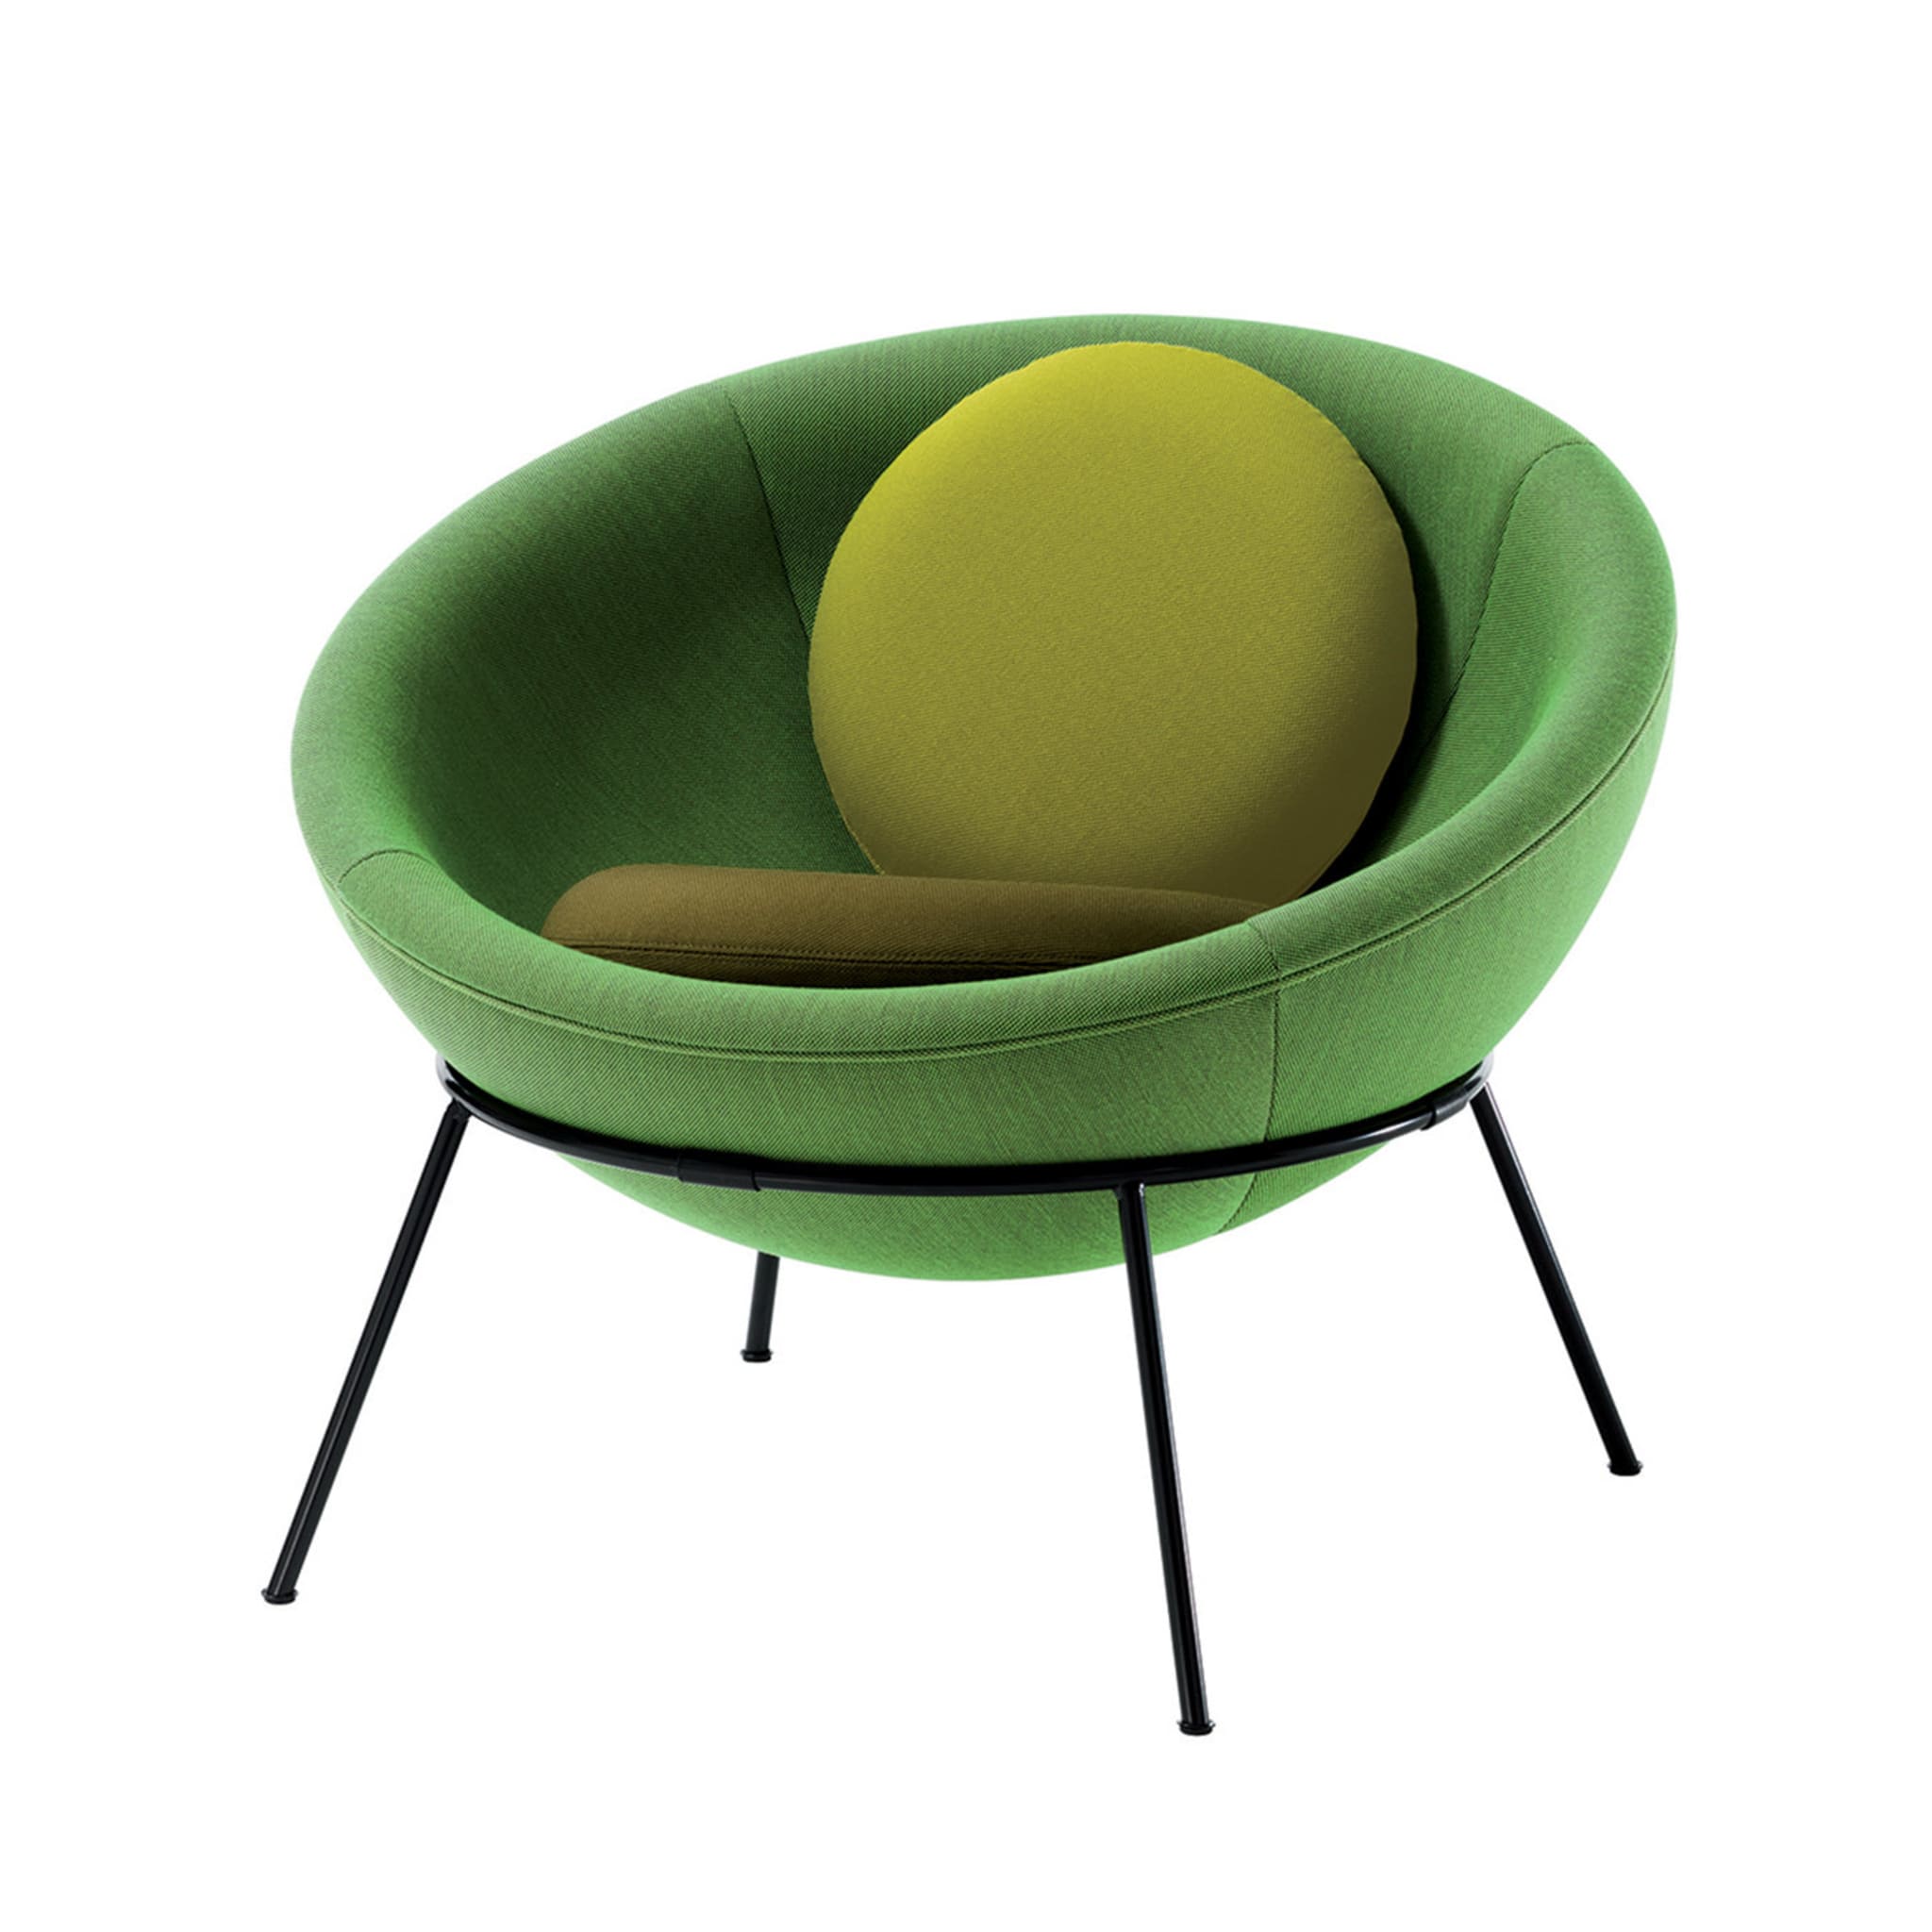 Bardi's Bowl Chair Green Nuance - Alternative view 1